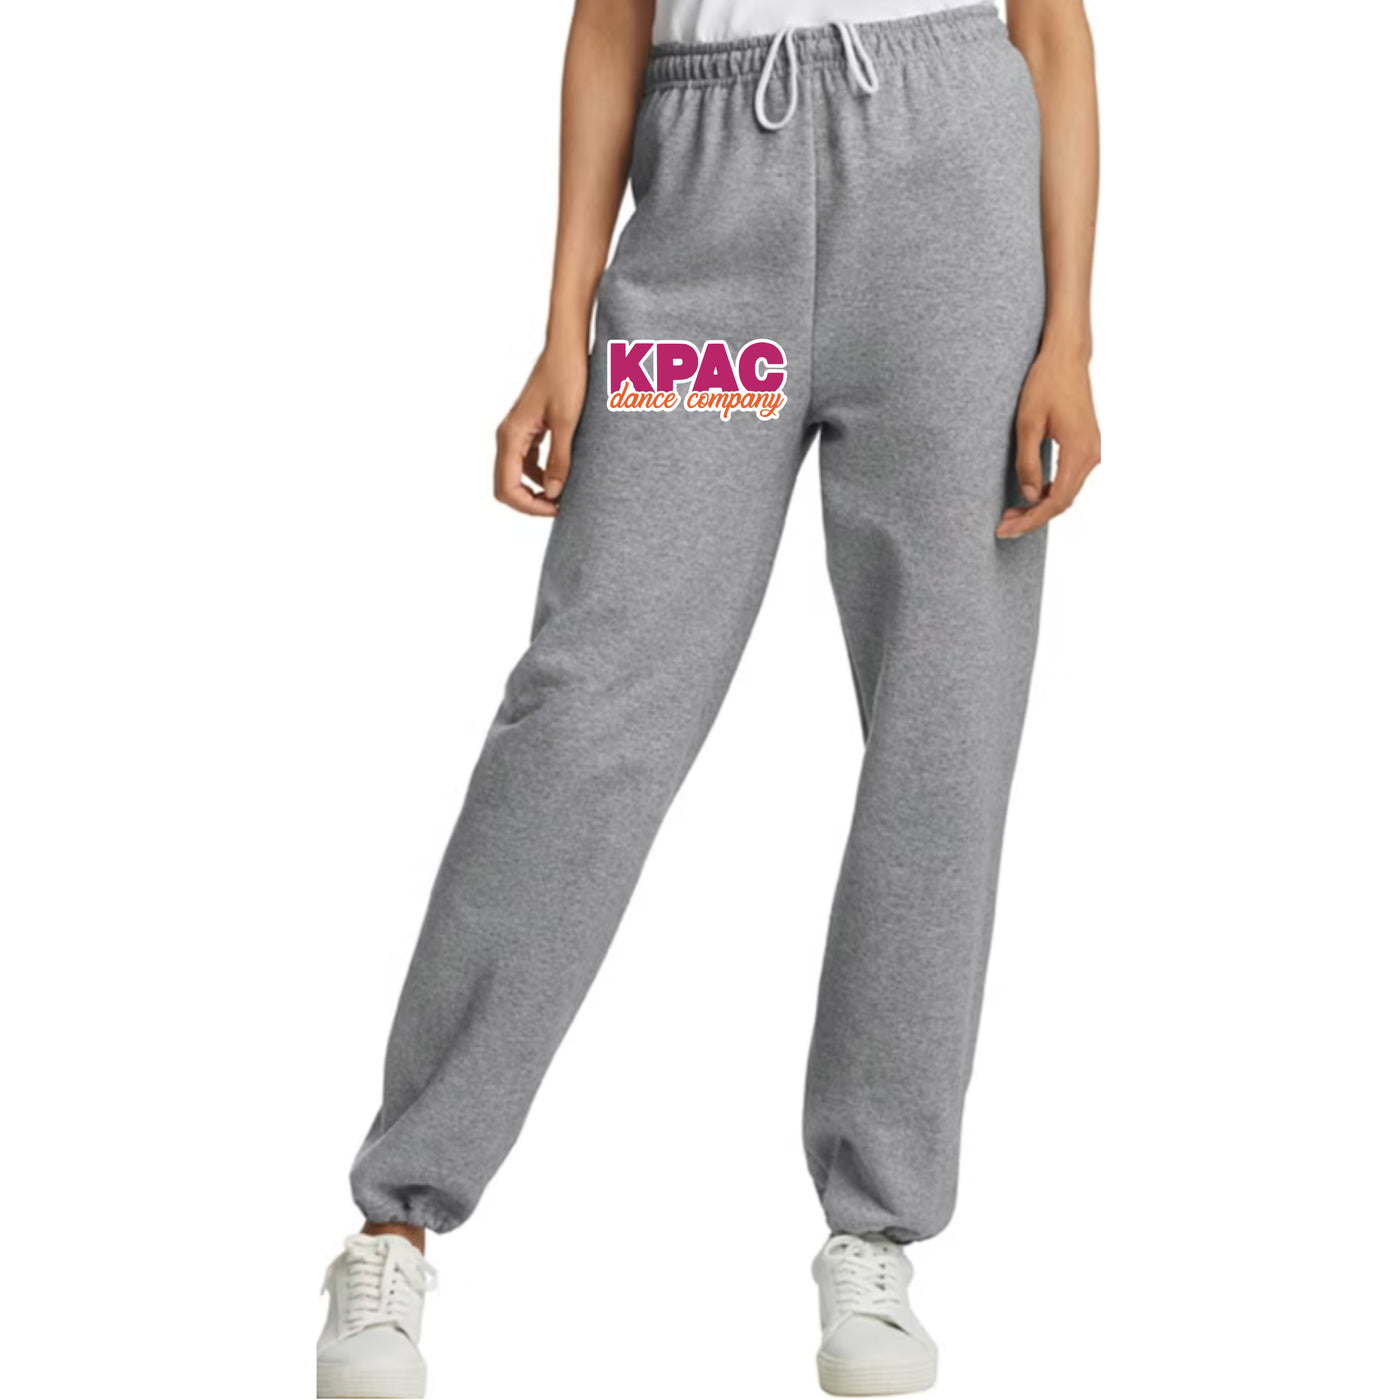 KPAC adult & youth sweatpants